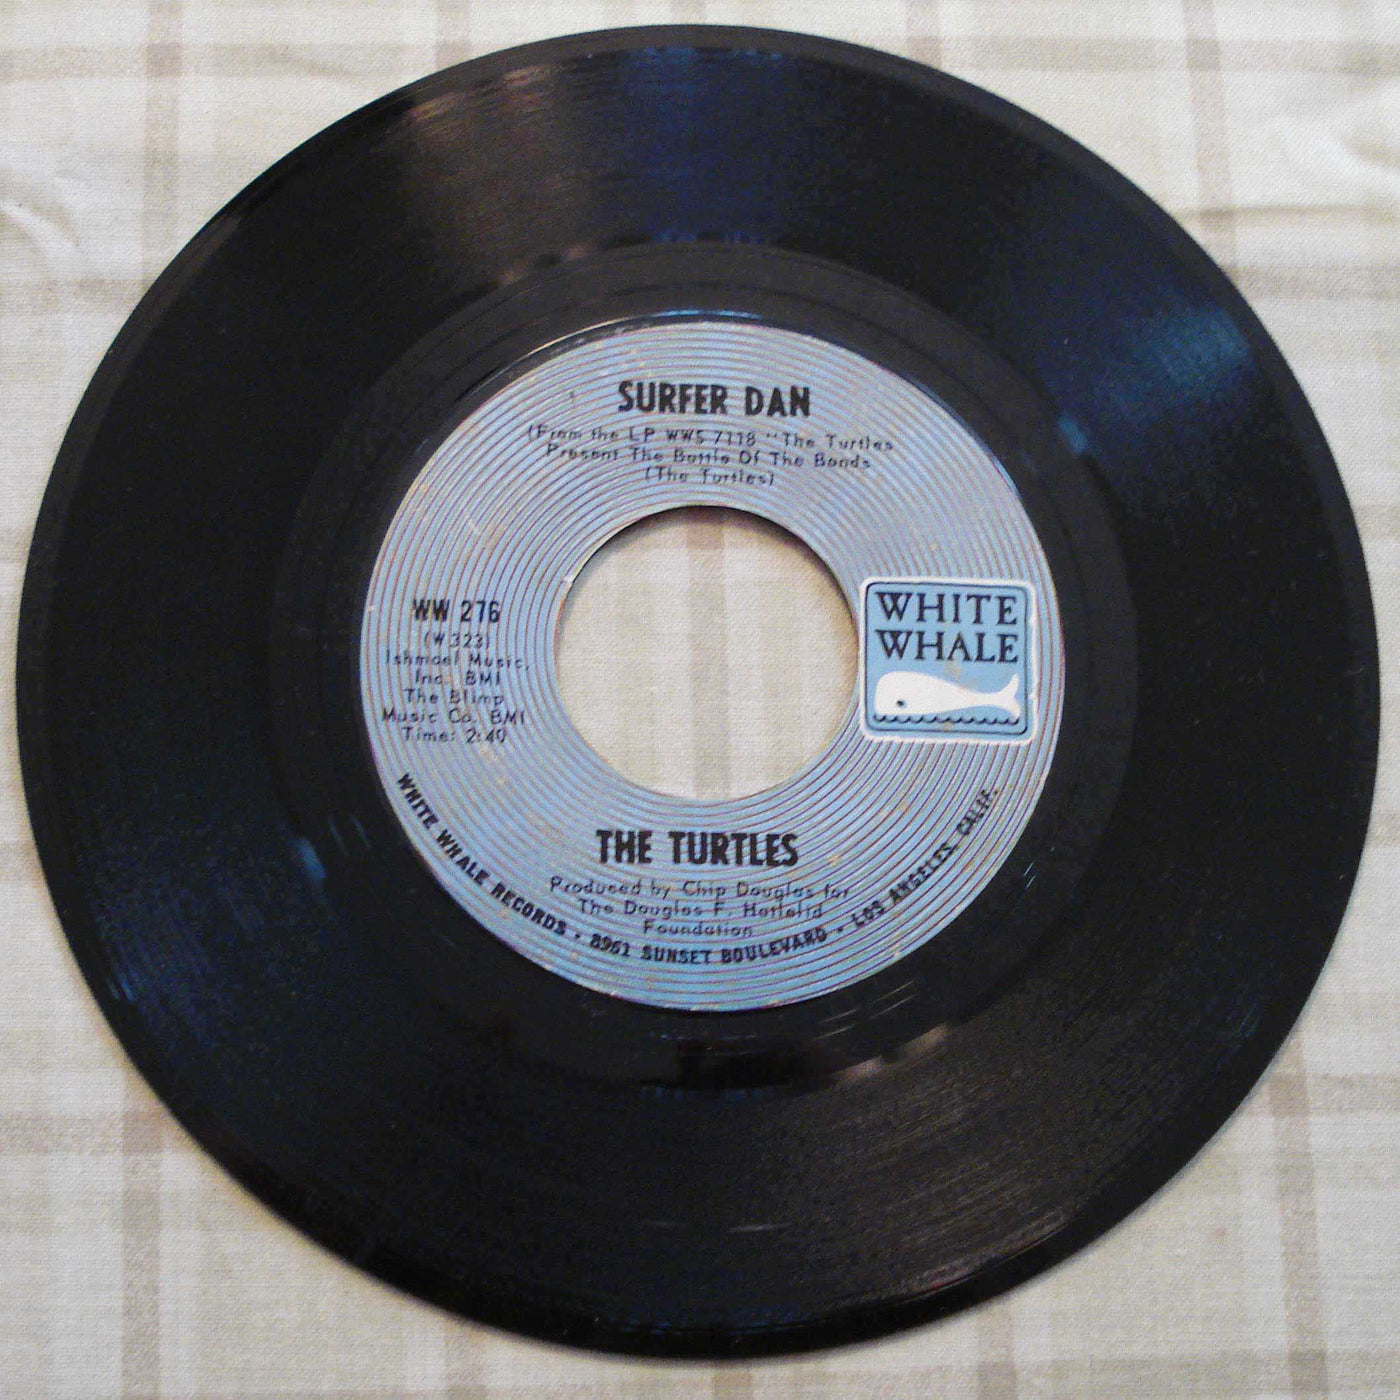 The Turtles - Elenore-Surfer Dan (1968) Vinyl Single 45rpm WW 276